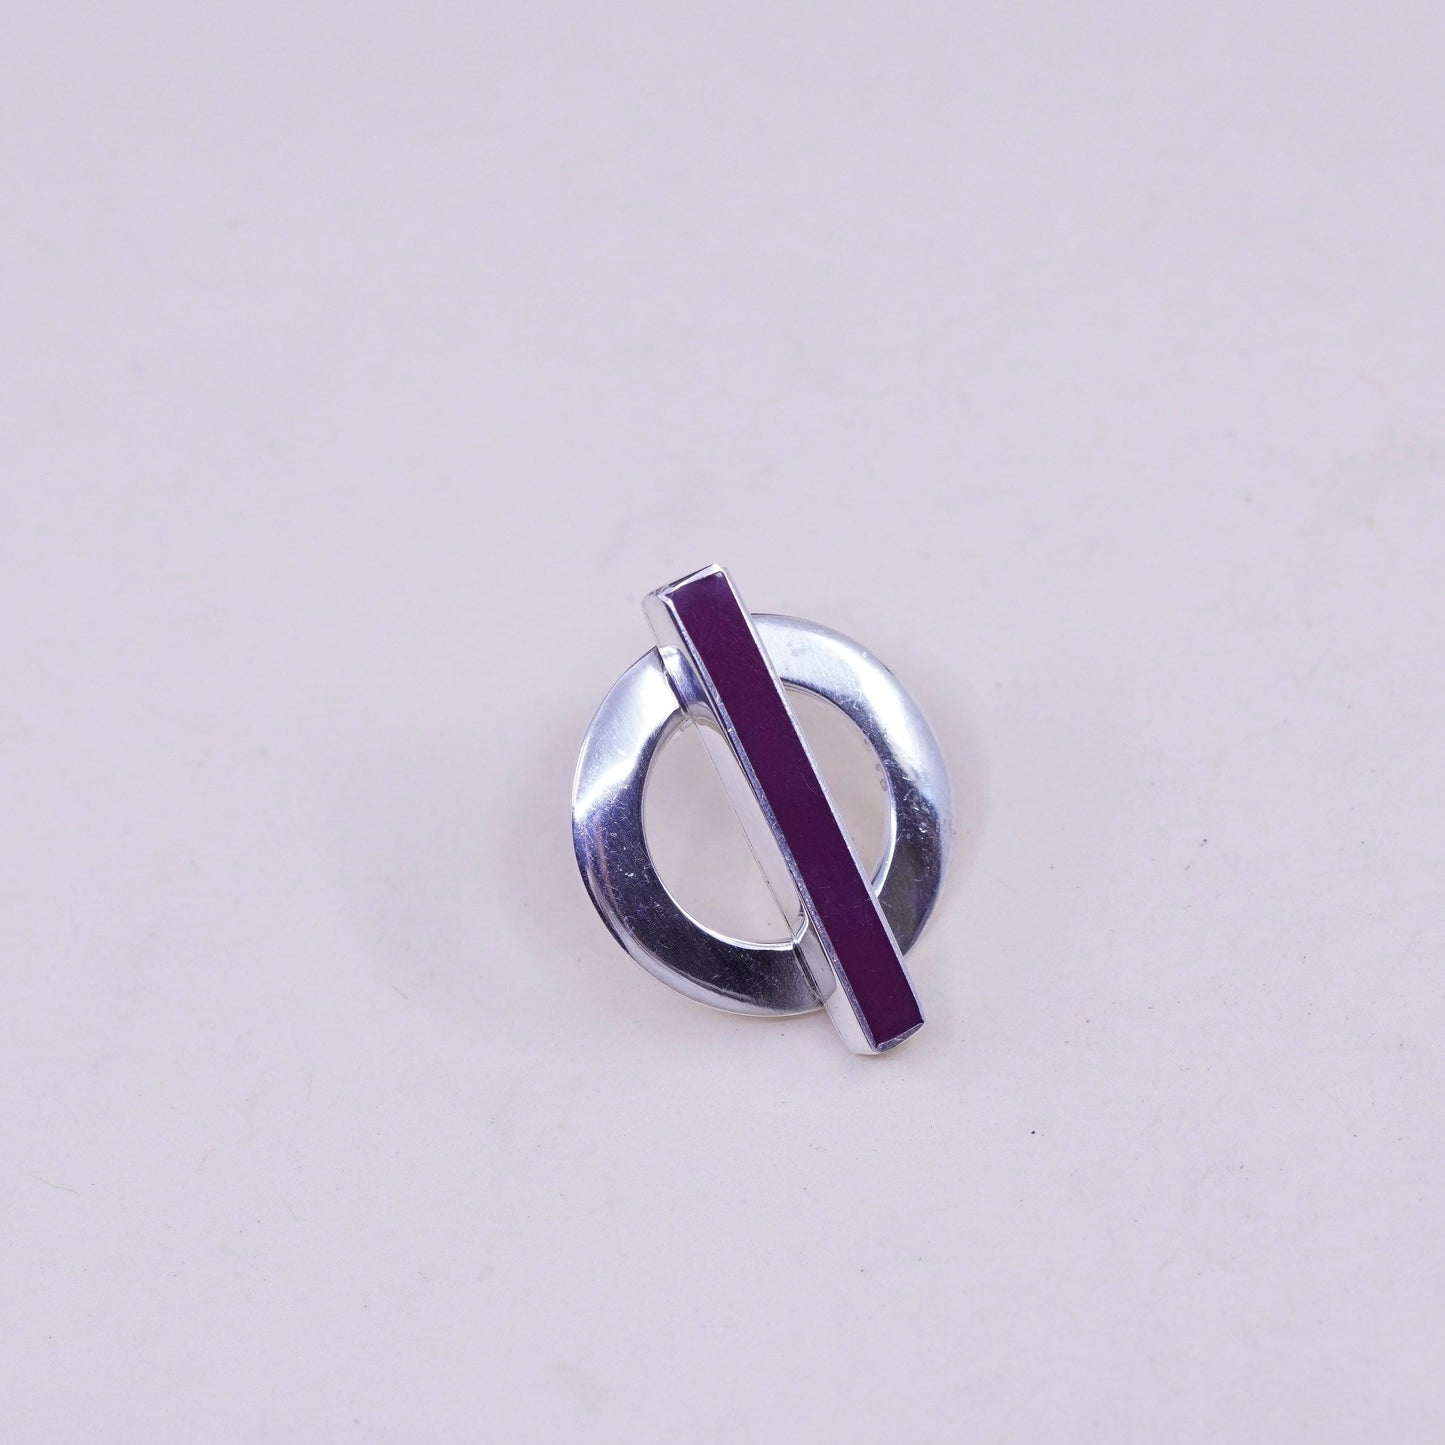 Vintage Sterling 925 silver handmade earrings circle studs with purple agate